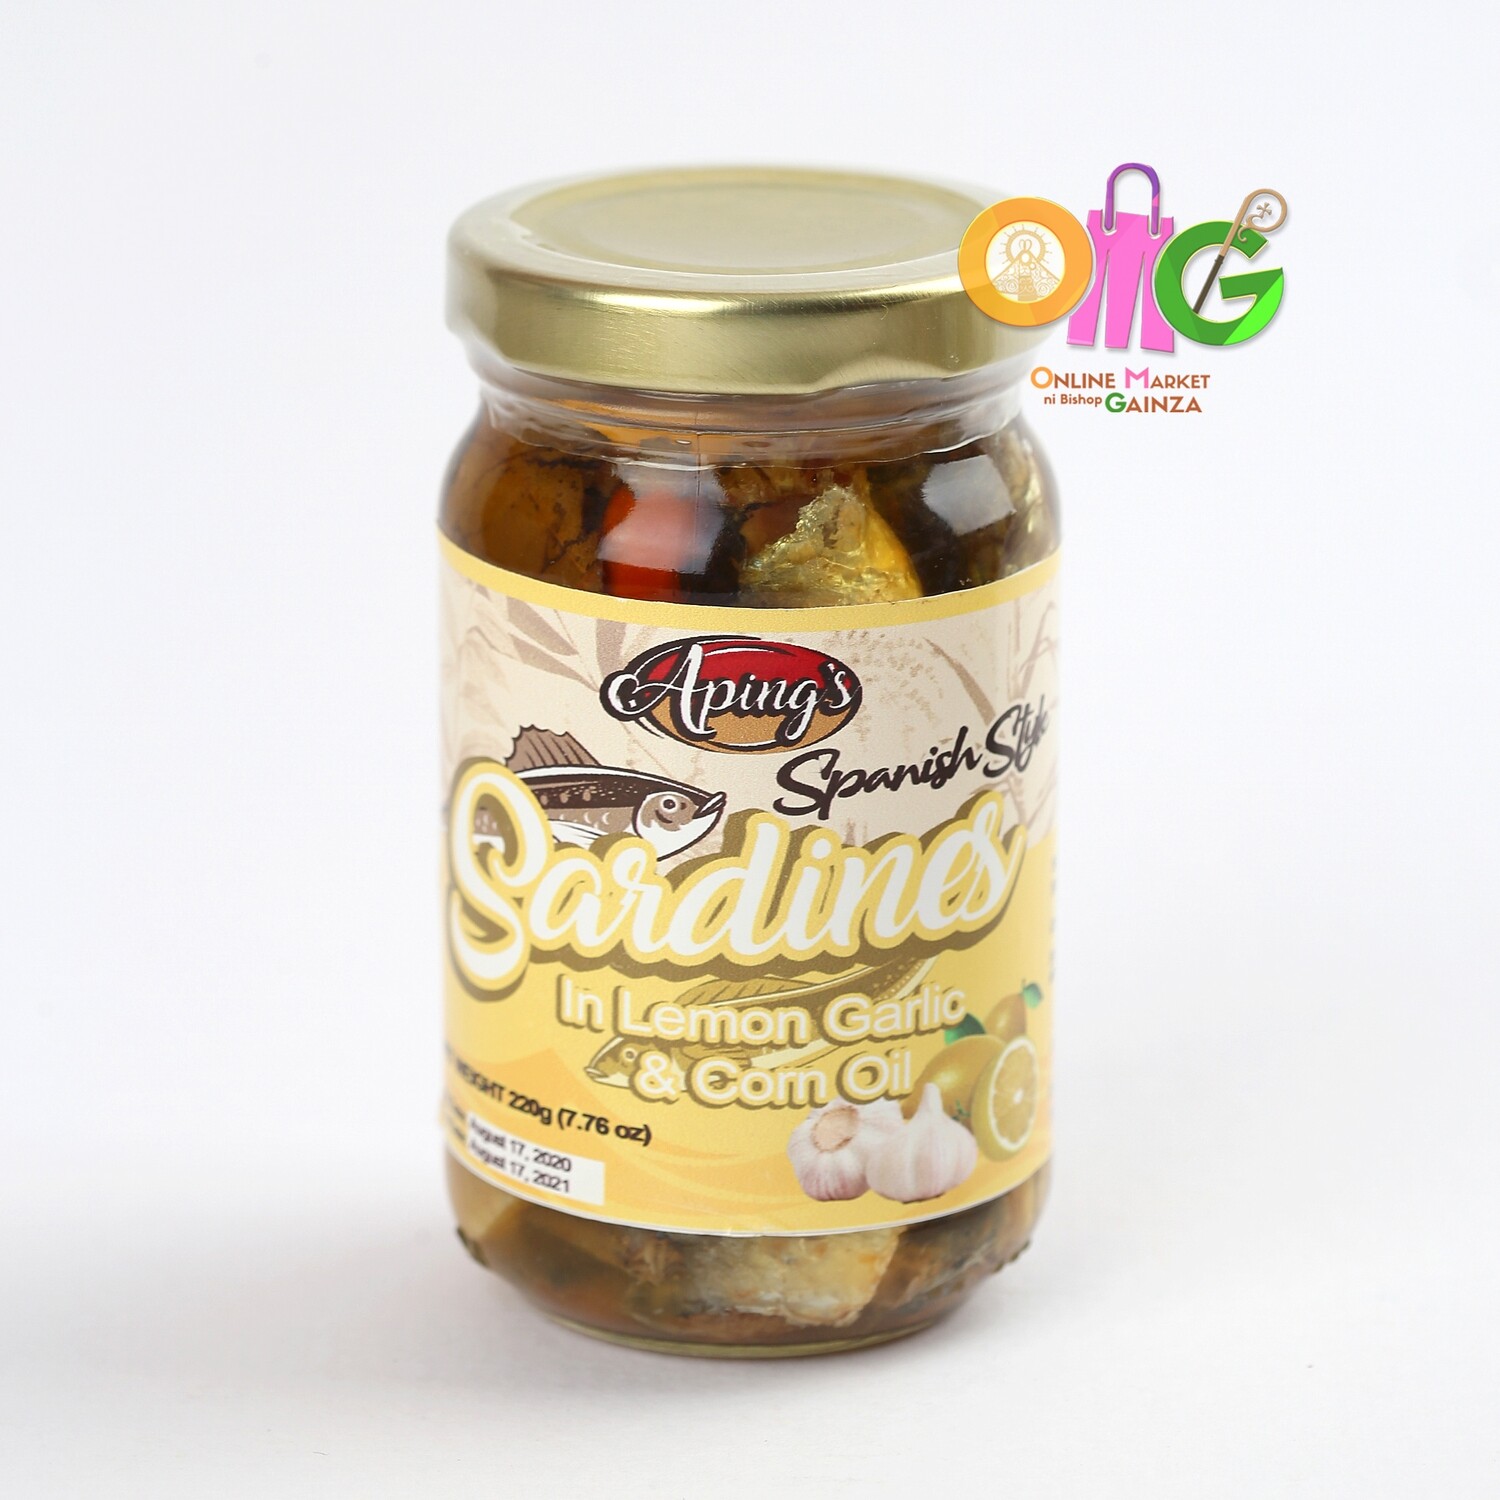 Aping's - Spanish Style Sardines in Lemon Garlic & Corn Oil